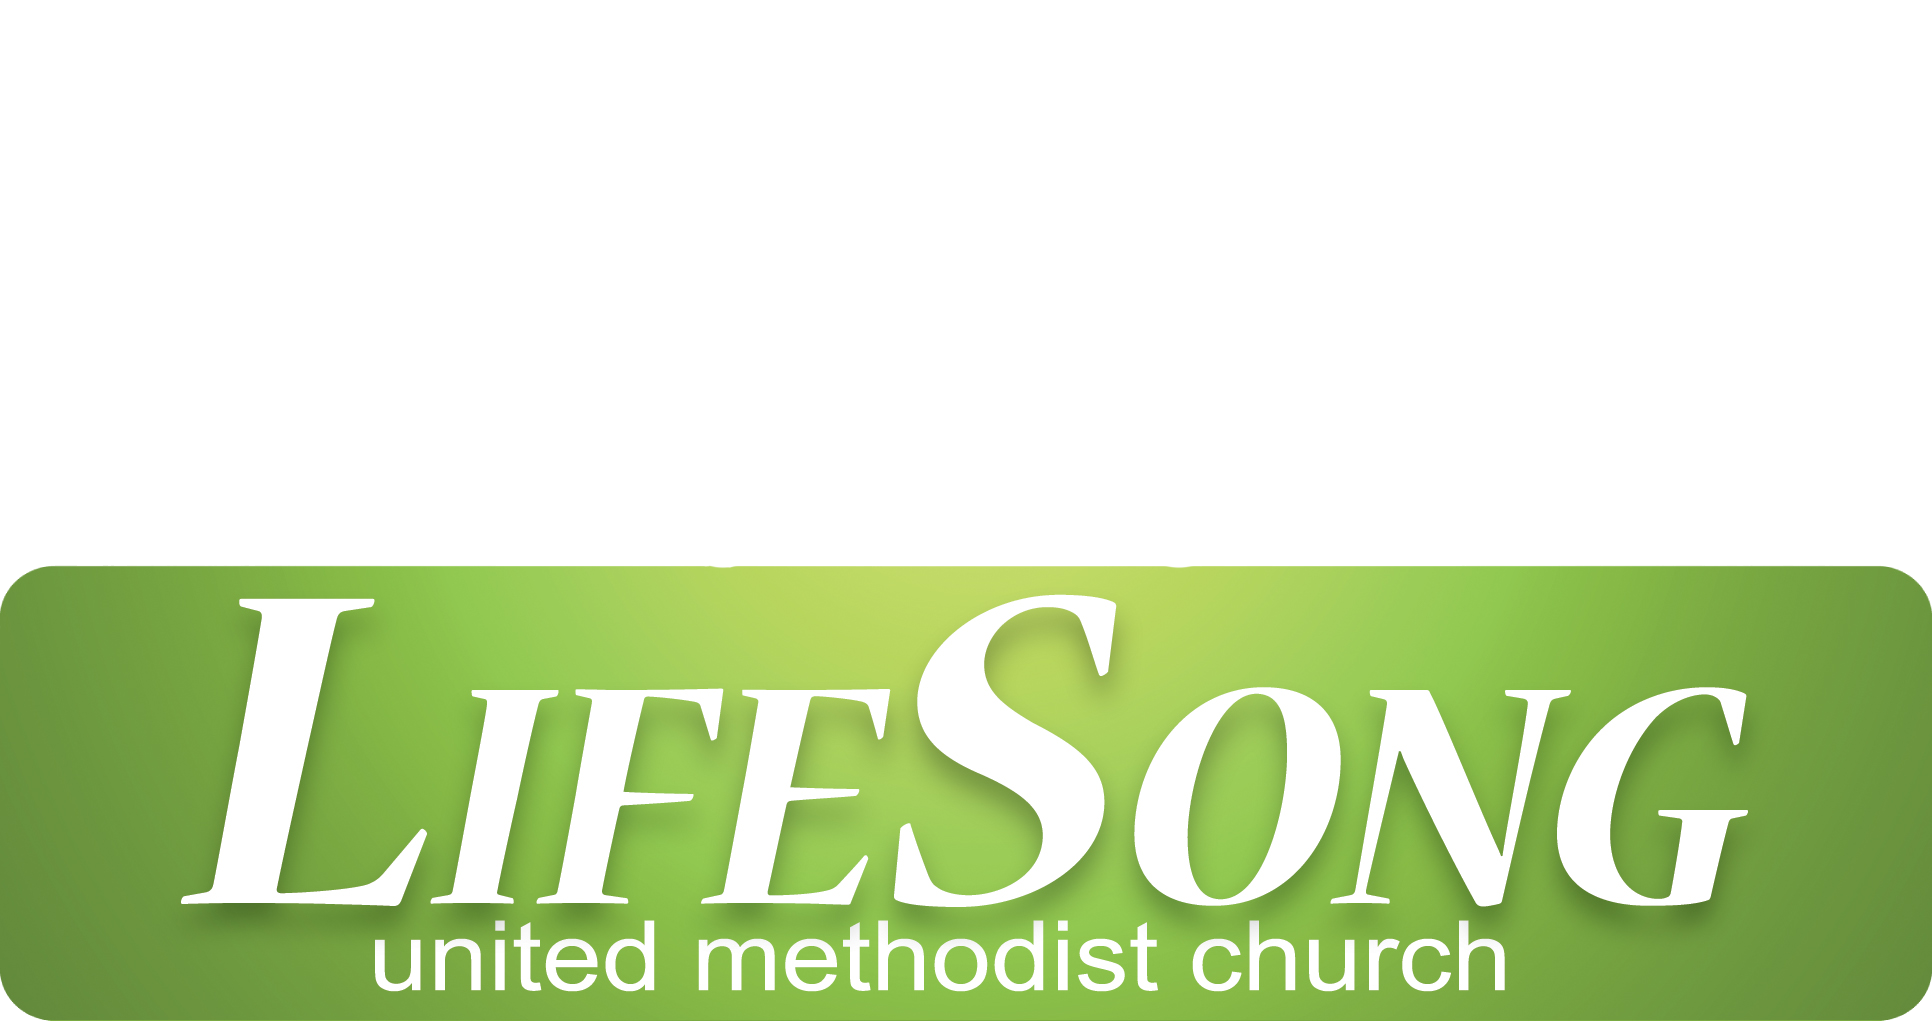 Lifesong Logo White - Lifesong Umc (1932x1022), Png Download